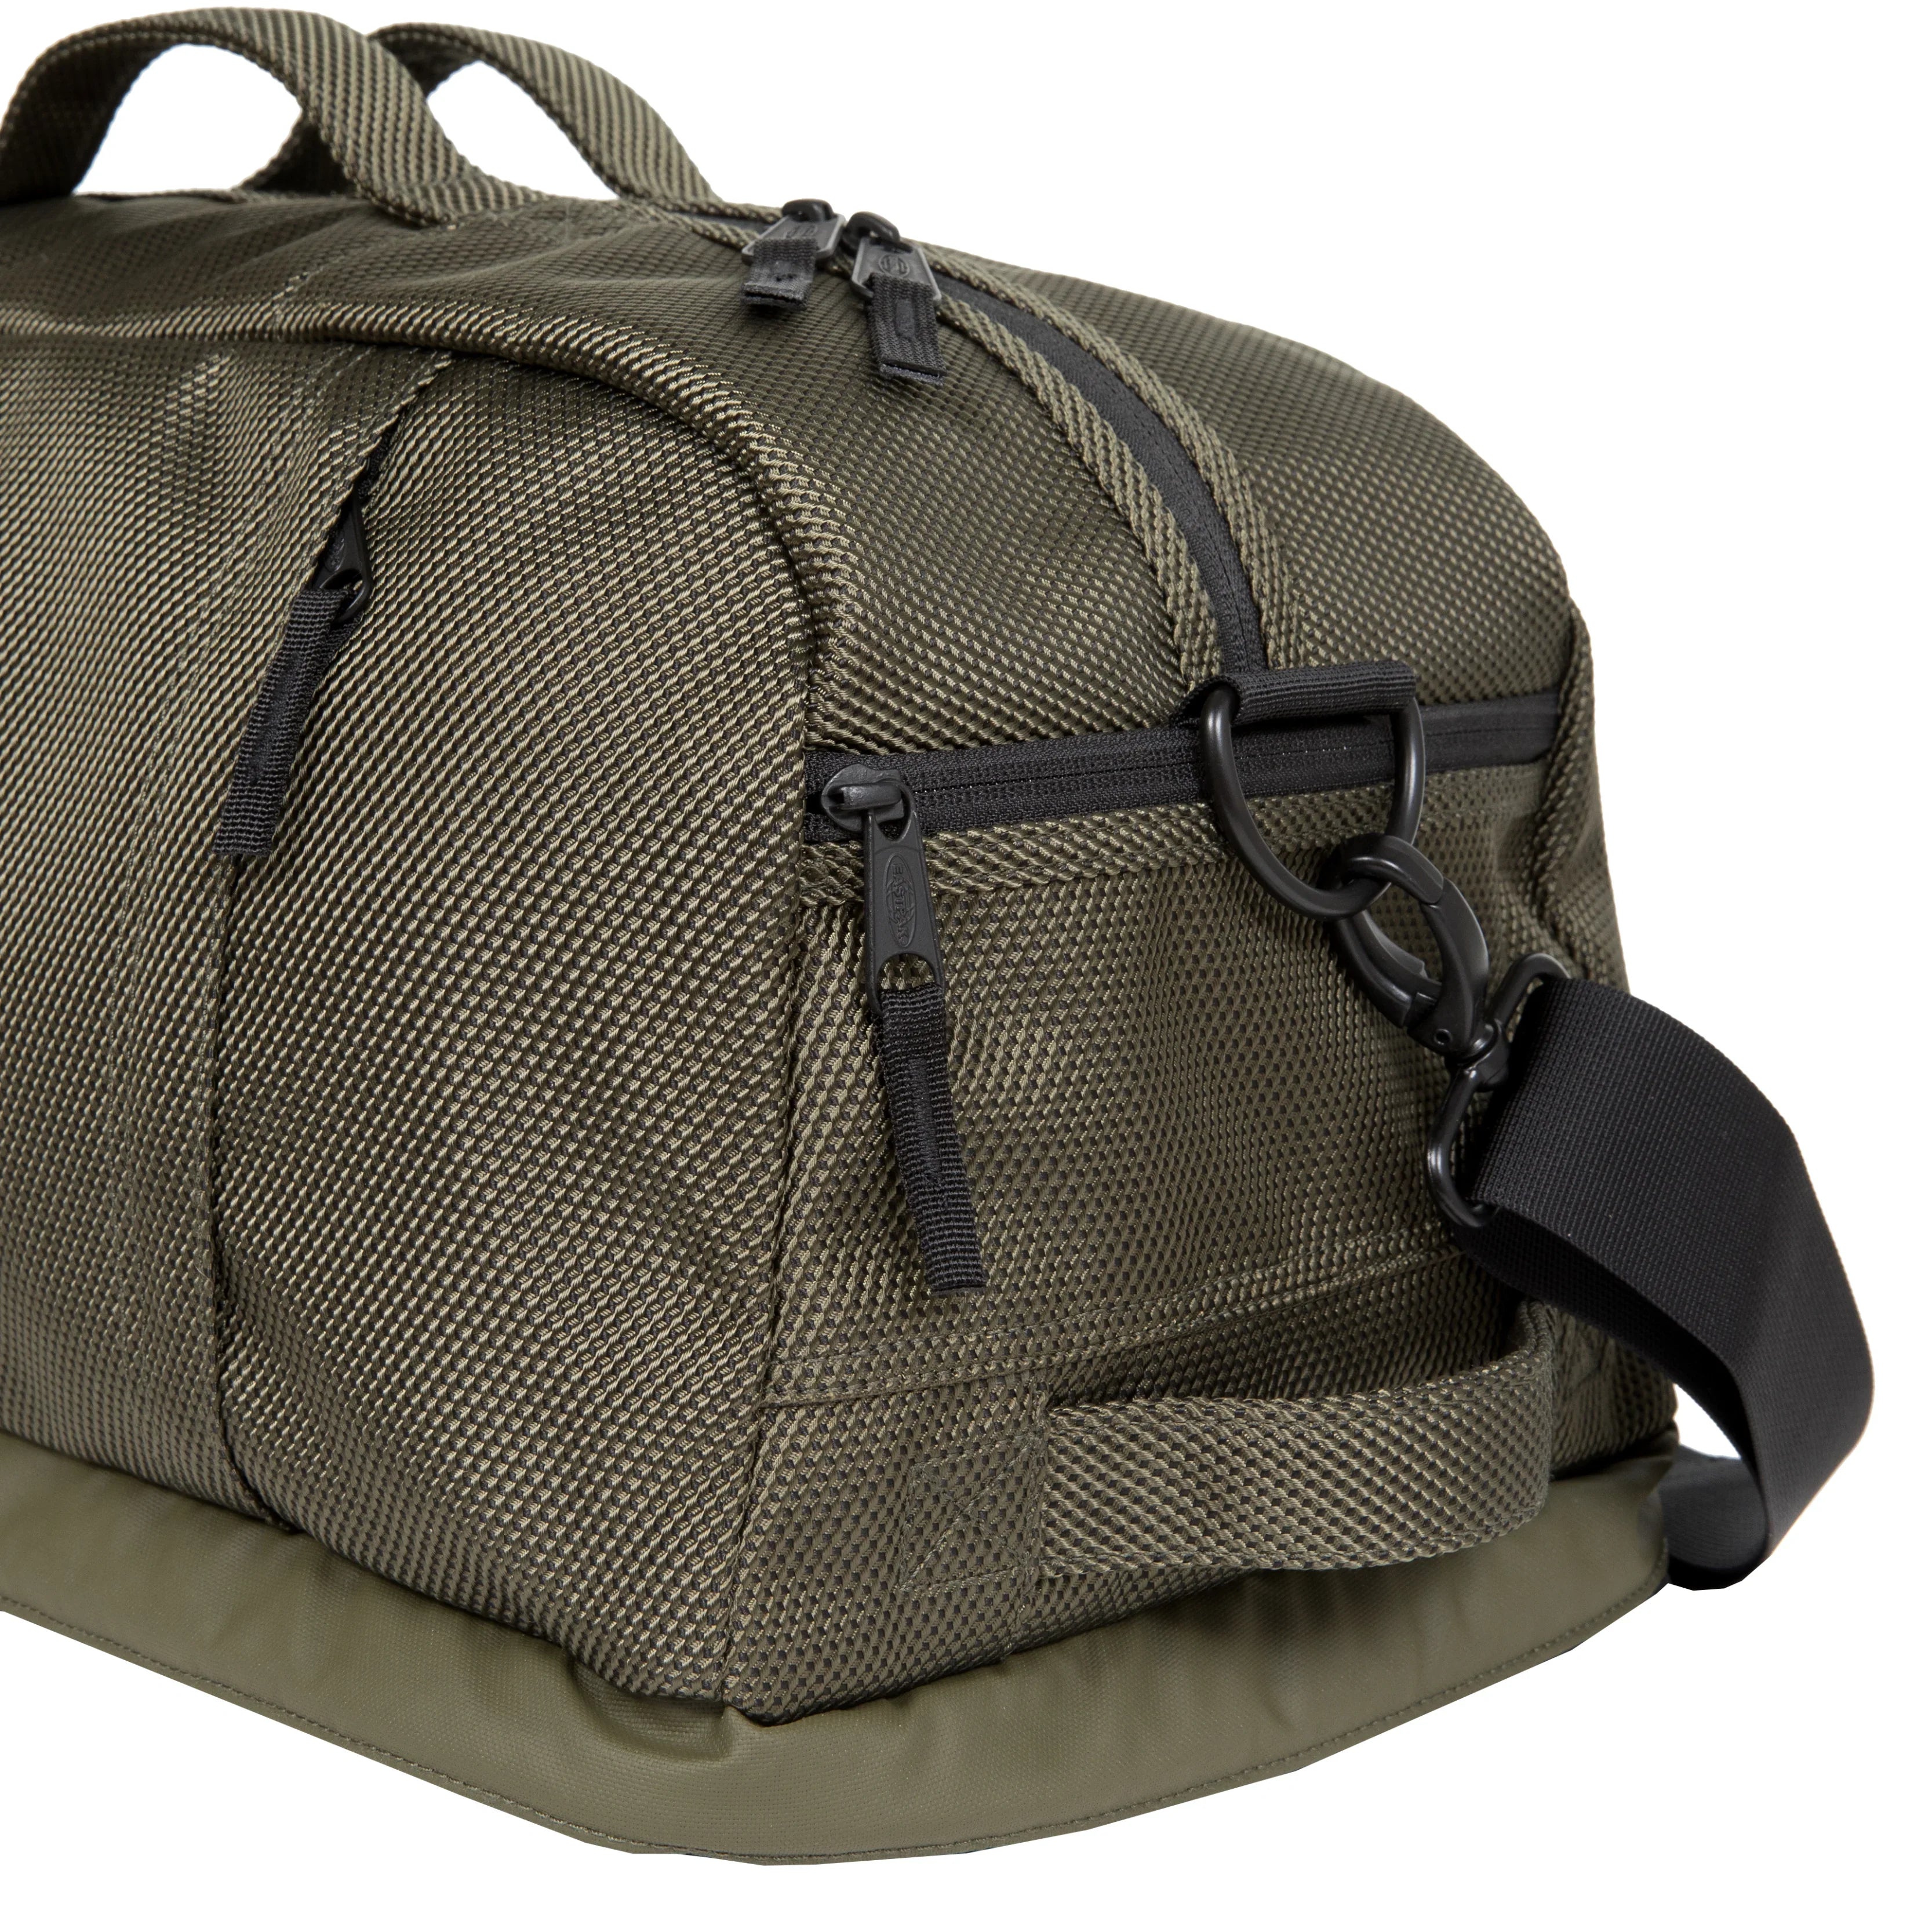 Eastpak Authentic Travel CNNCT Stand Plus Travel Bag 51 cm - Khaki